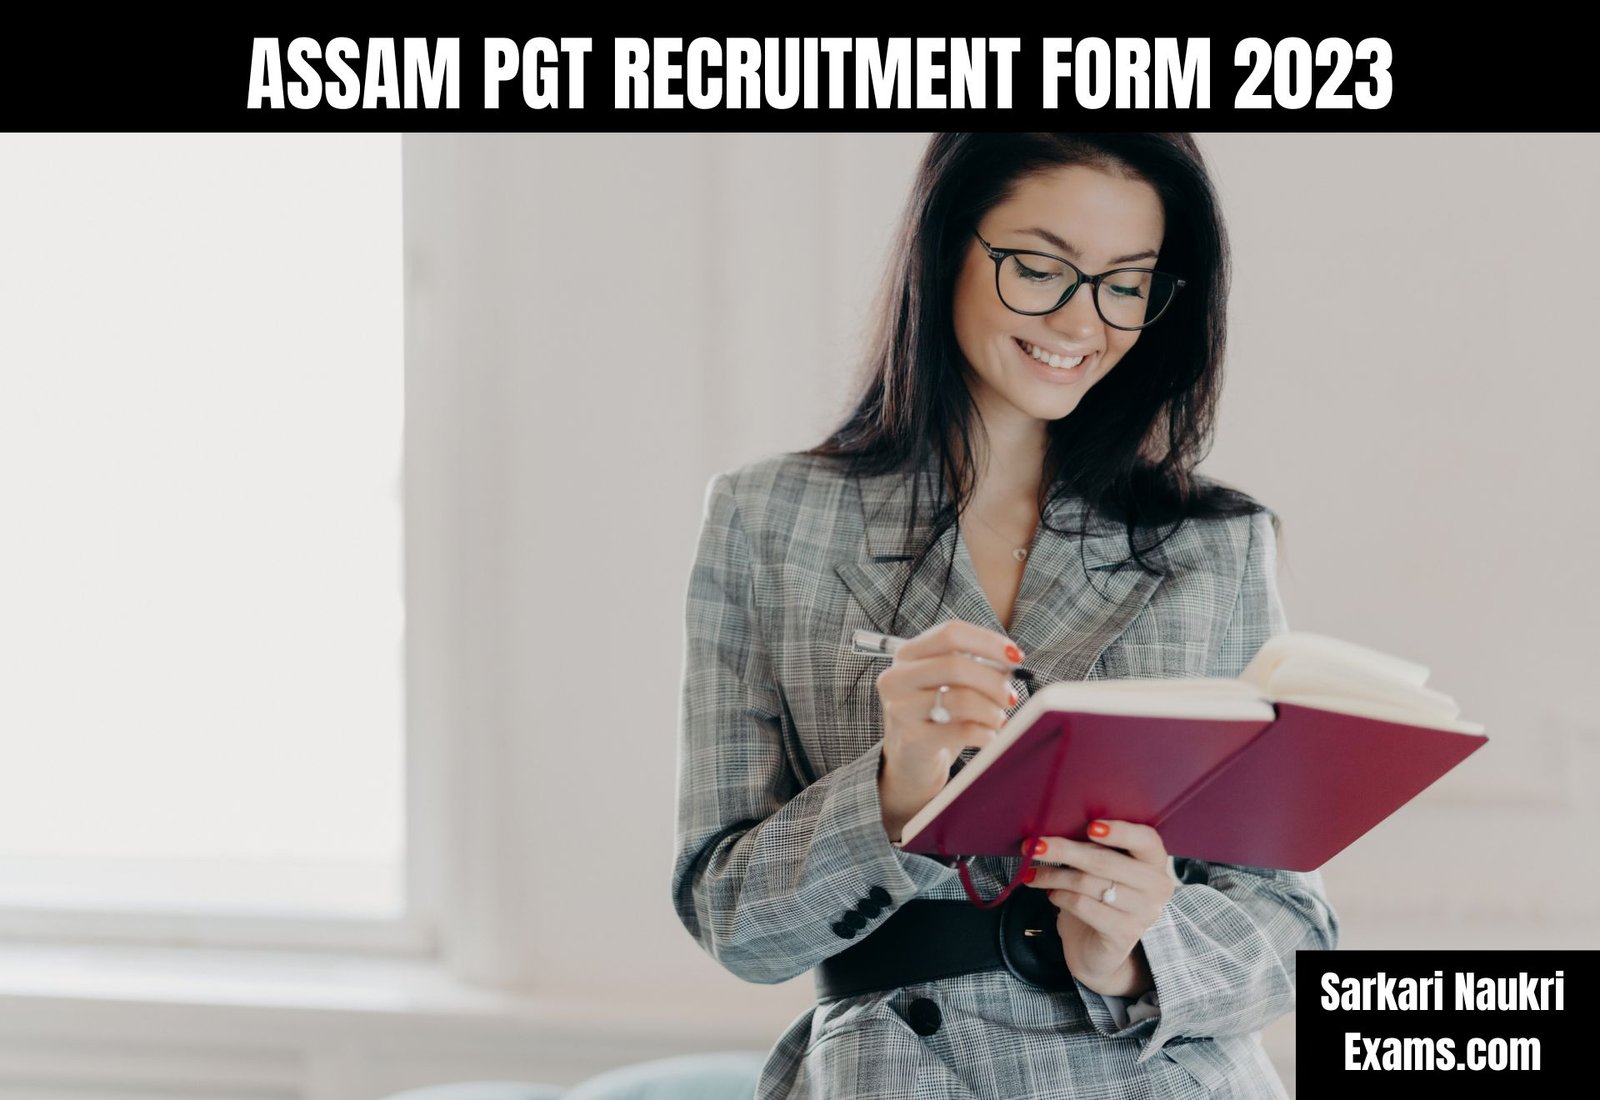 Assam PGT Recruitment Form 2023 | Merit Based Job